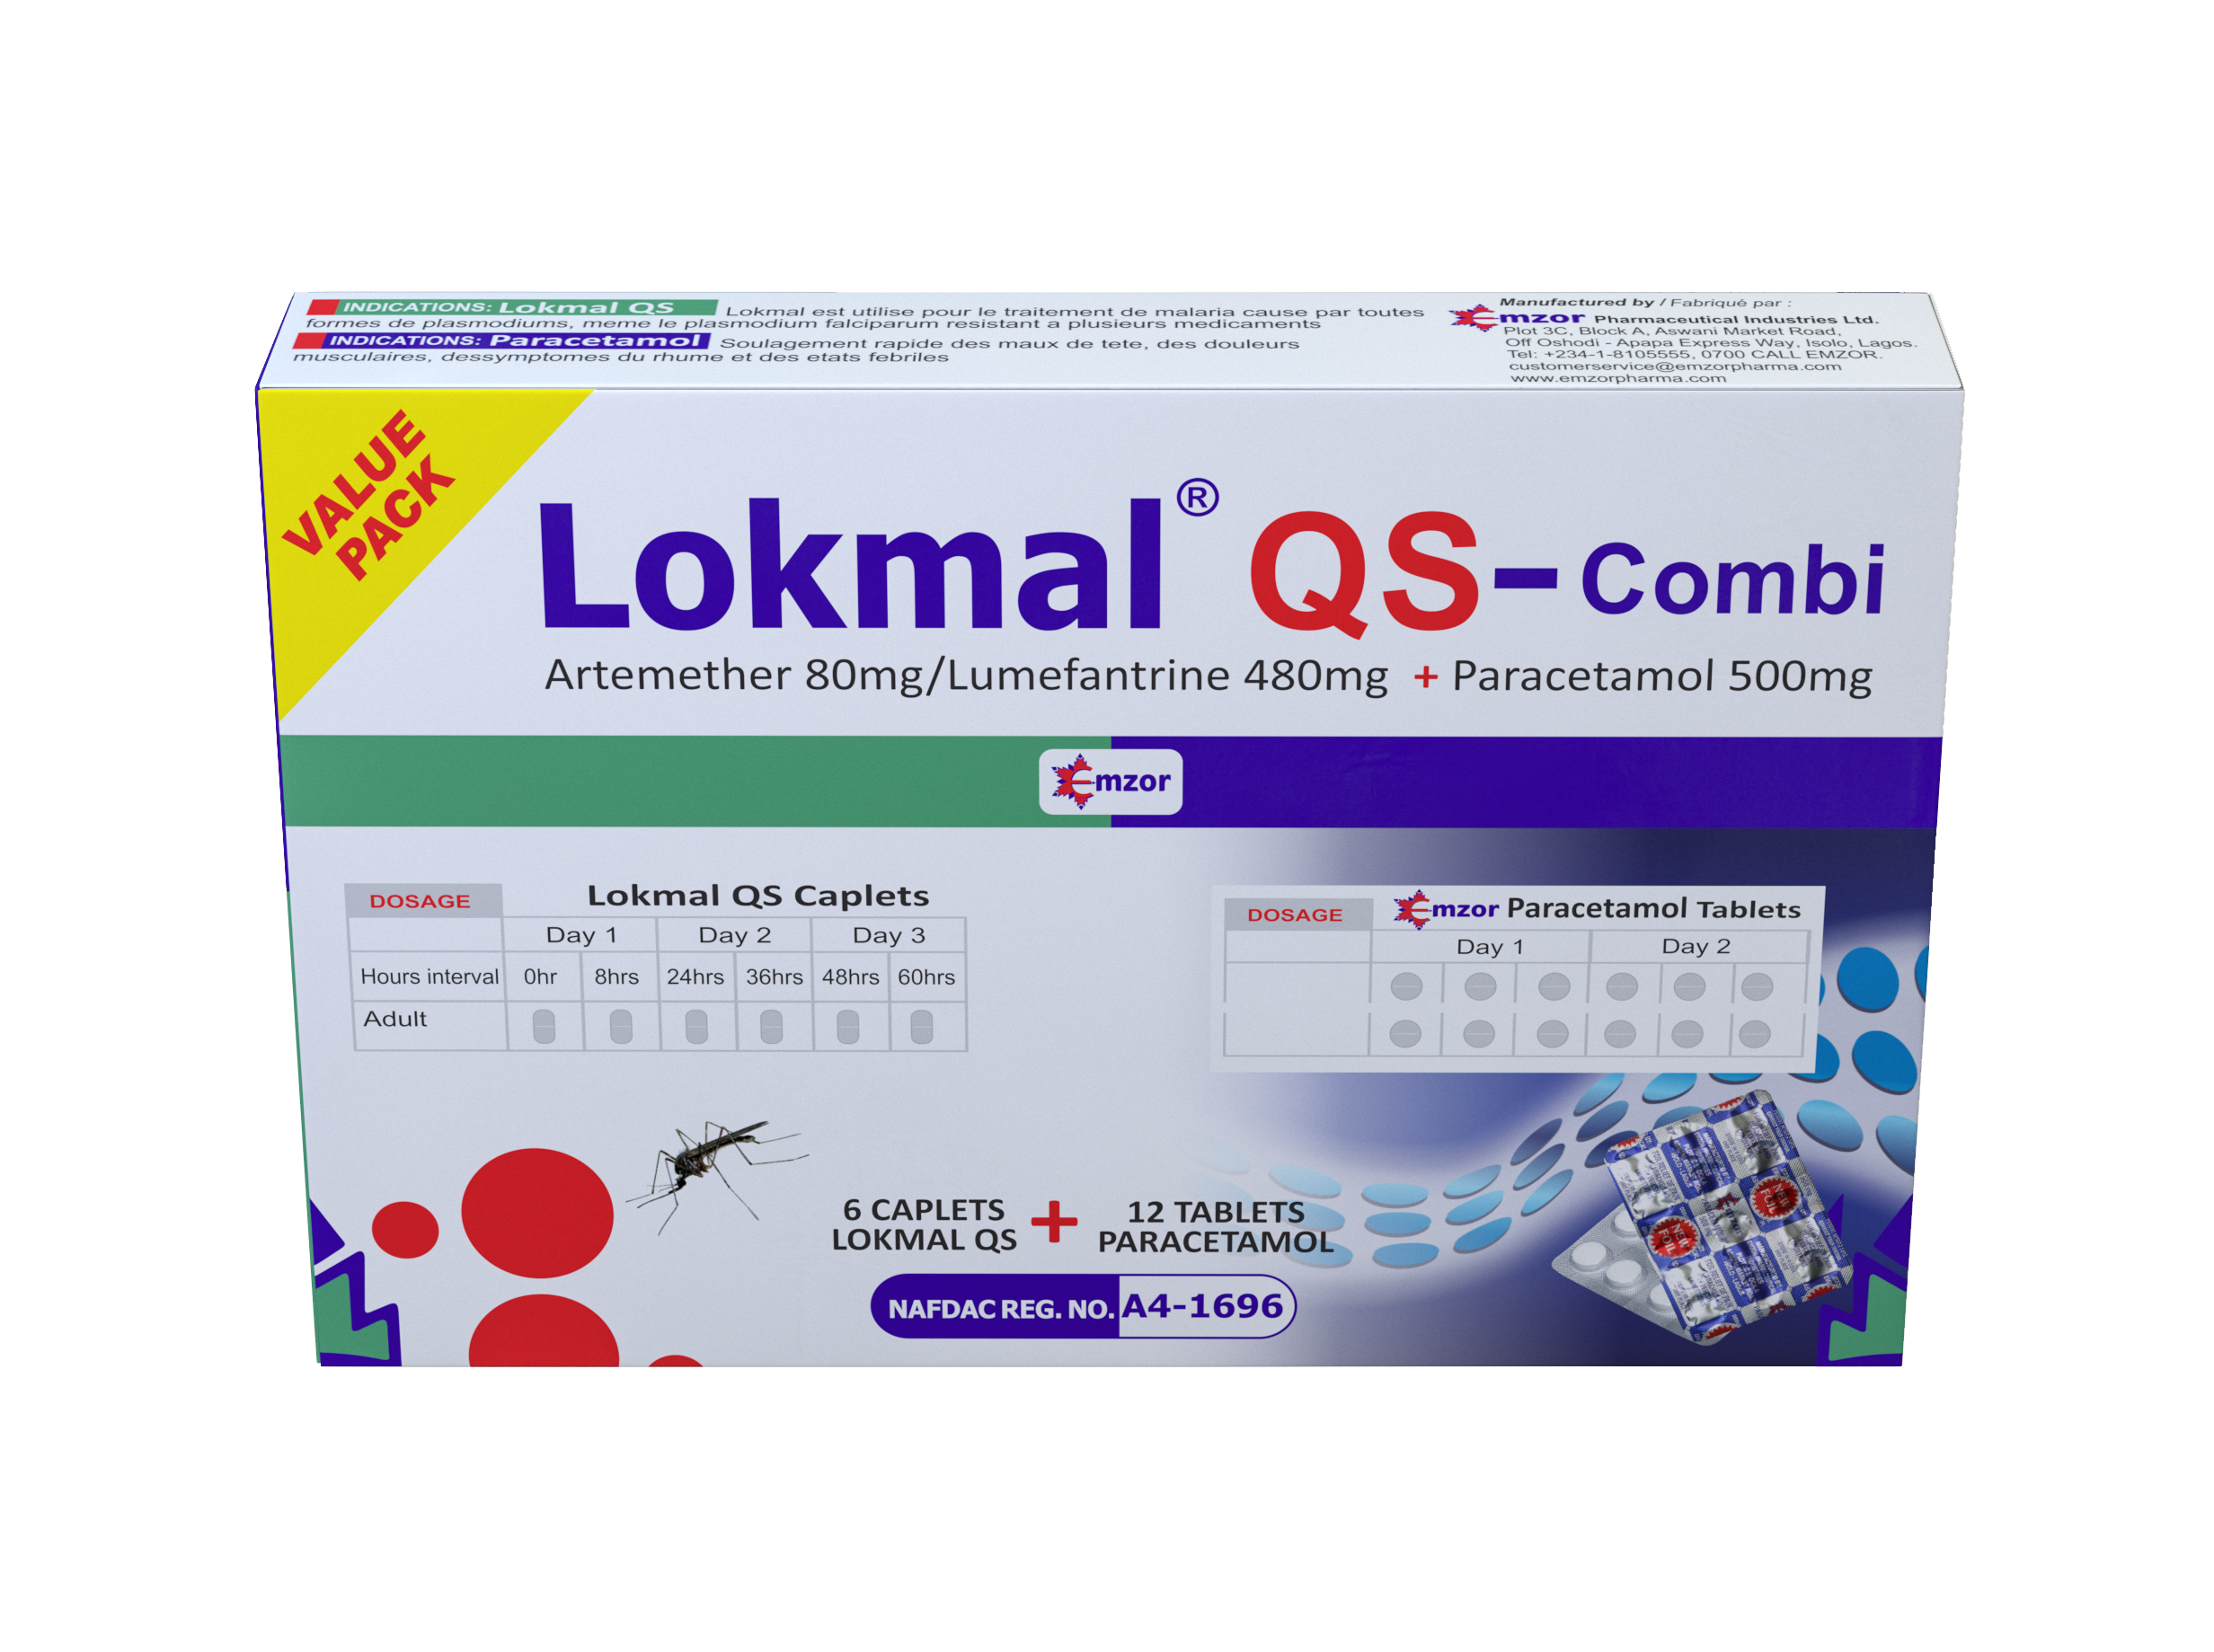 Lokmal QS-Combi-image